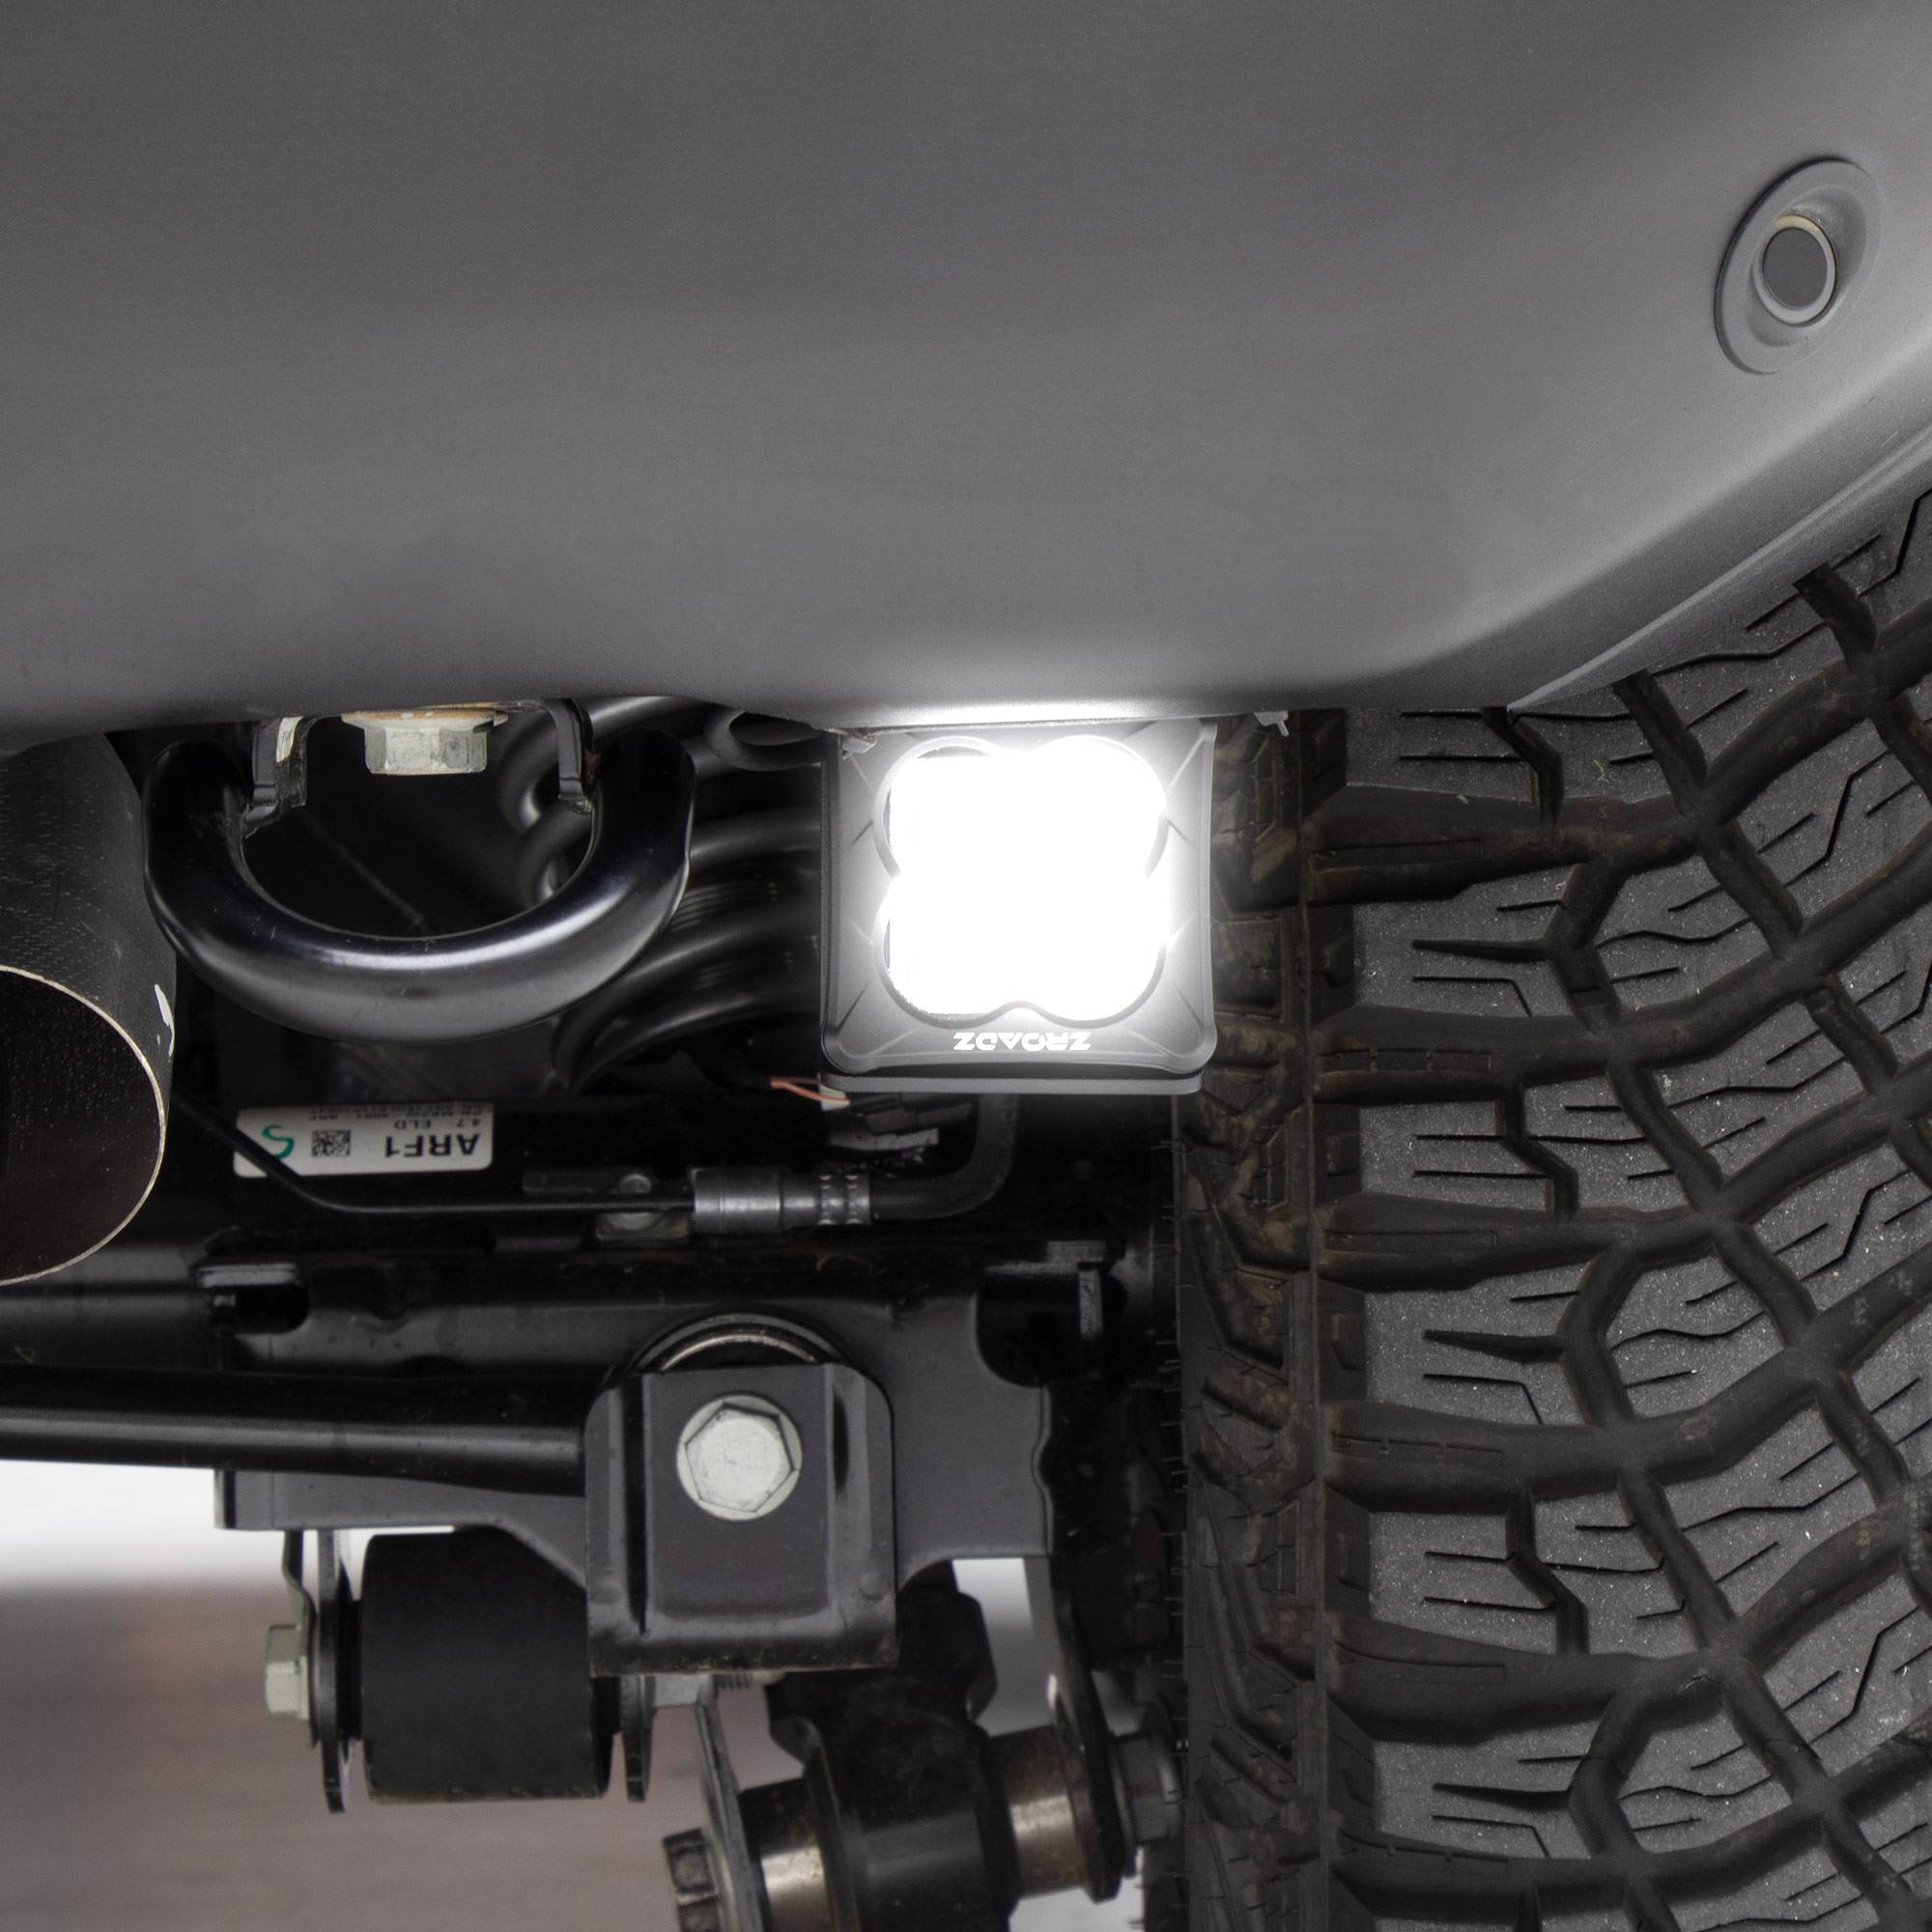 ZROADZ OFF ROAD PRODUCTS - 2021-2022 Ford Bronco Rear Bumper LED KIT, Includes (2) 3 inch ZROADZ White LED Pod Lights - Part # Z385401-KIT